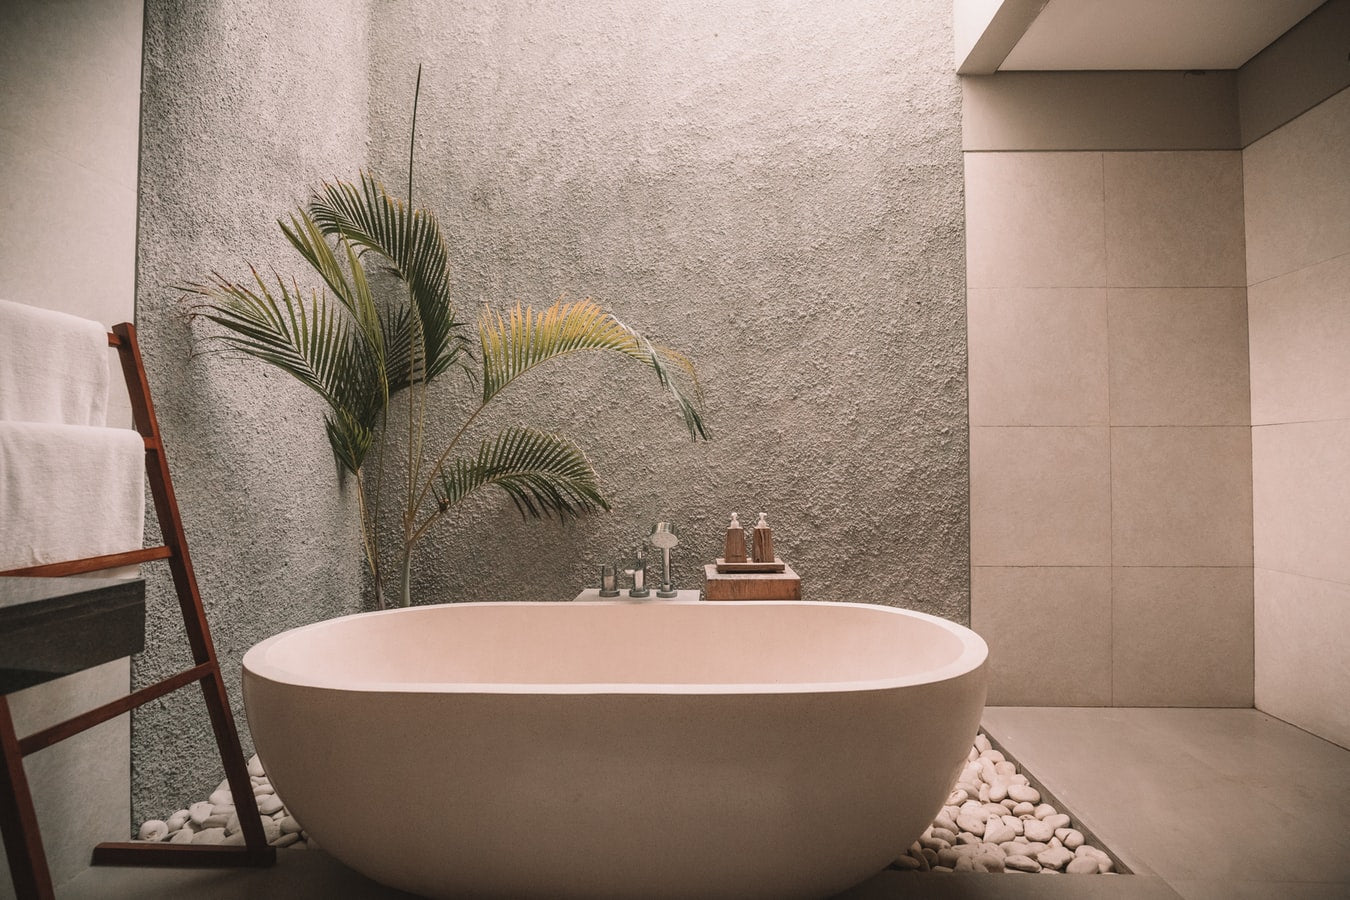 A bathtub next to a palm tree